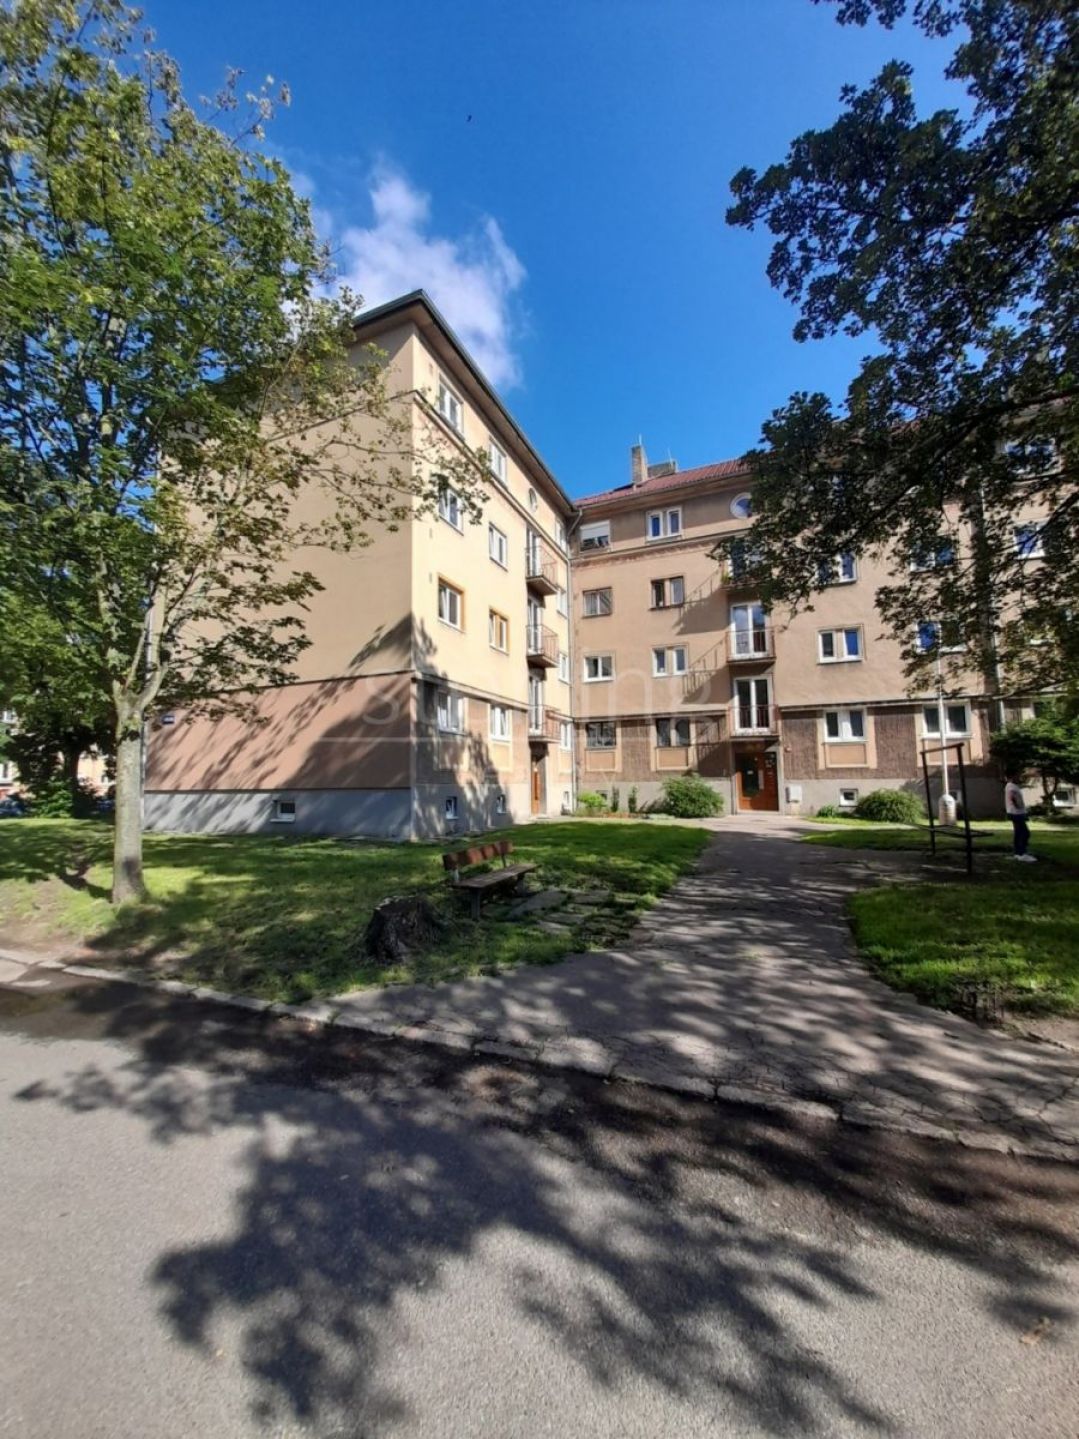 Prodej bytu 2+1, 56 m2, Kladno-Kročehlavy, ul. Jaroslava Foglara, 1.NP, cihla, sklep, OV